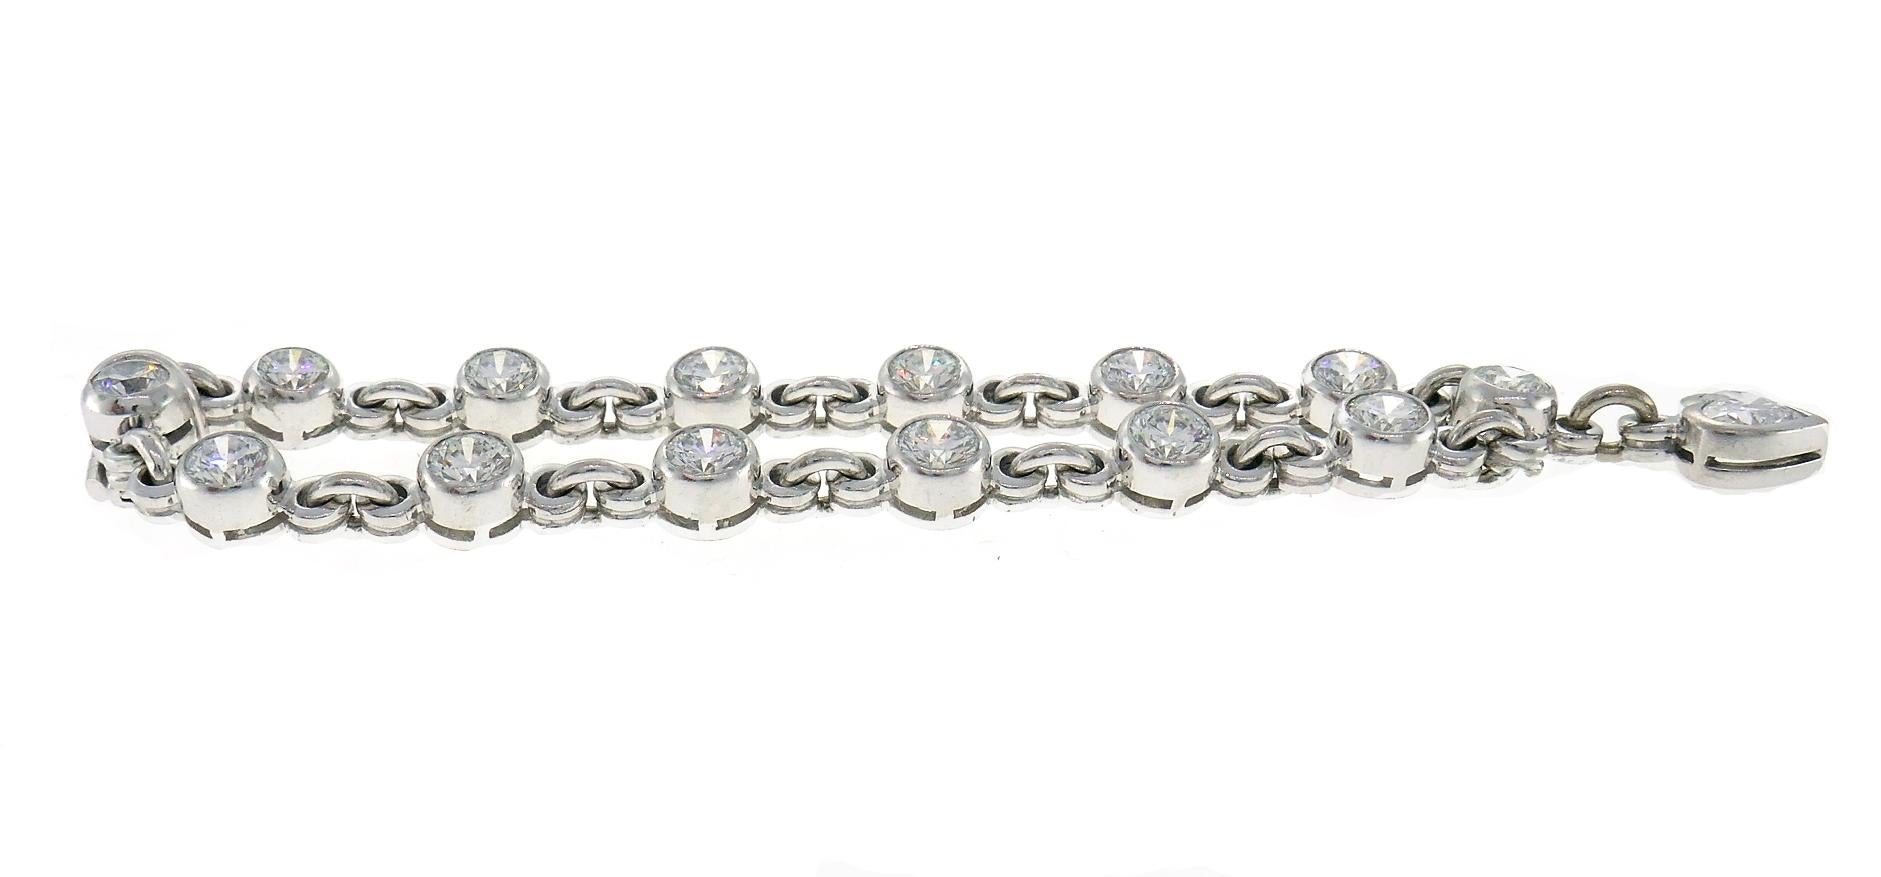 Mixed Cut Graff Diamond 18k White Gold Bracelet with Heart Diamond Charm